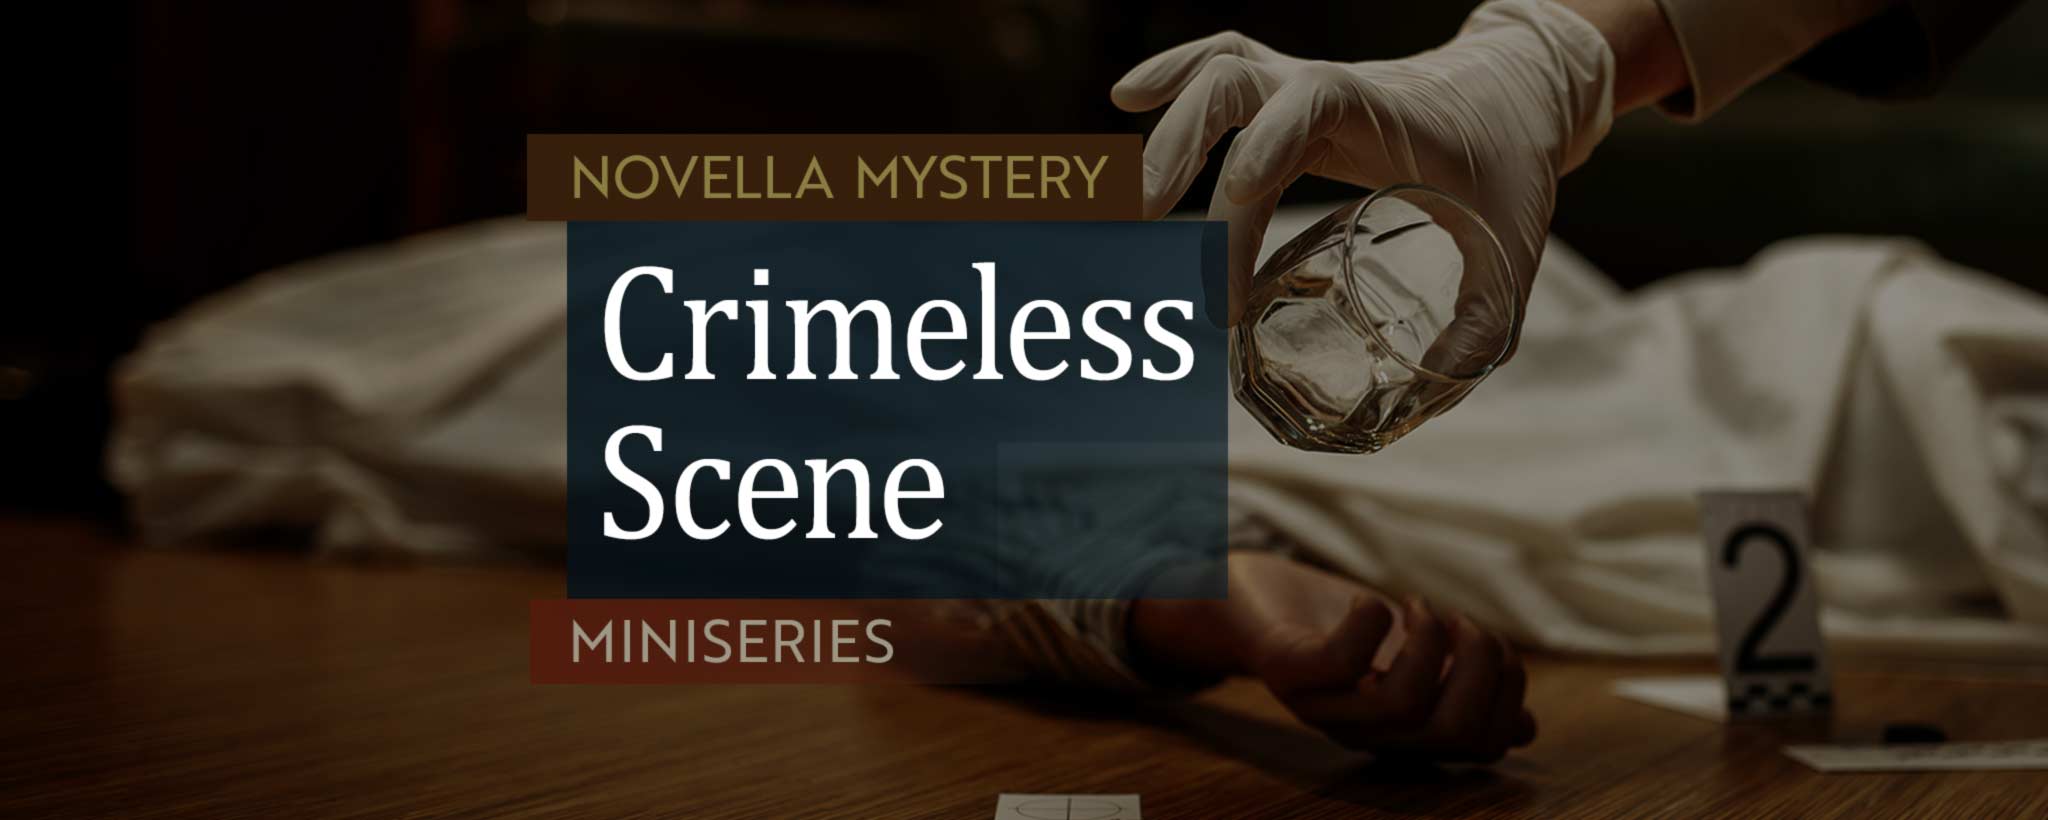 'Crime scene clues'